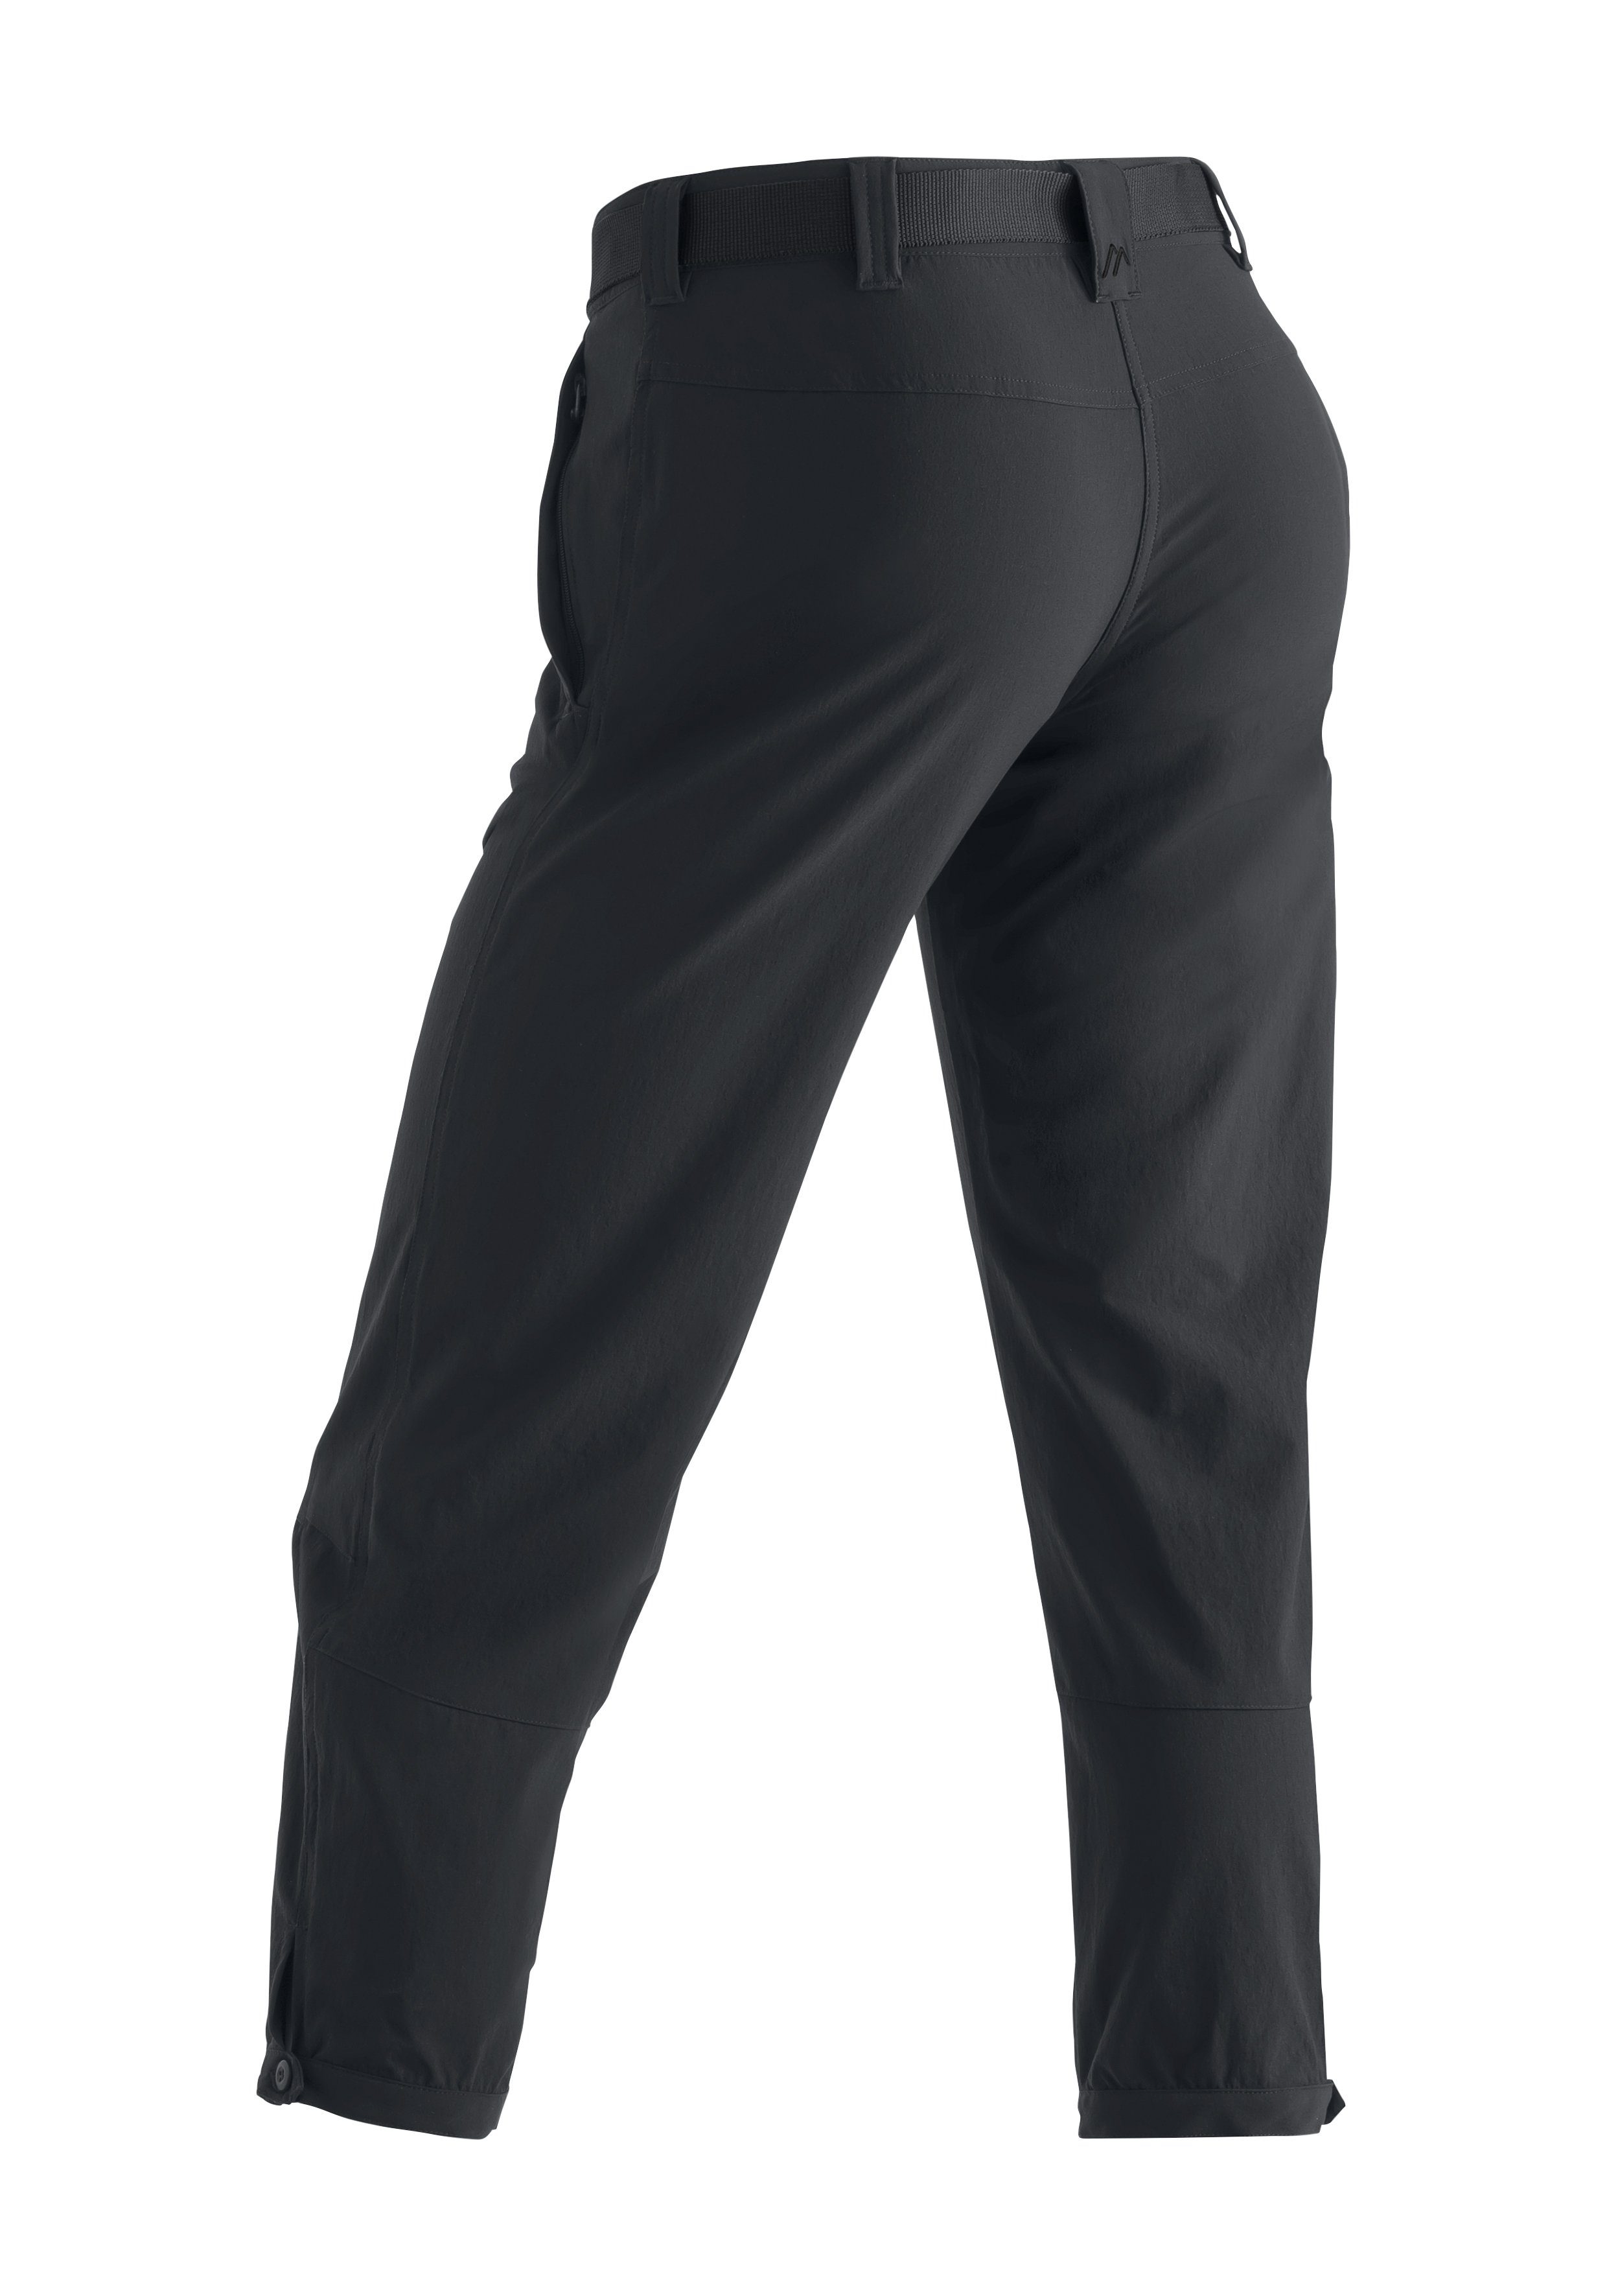 Maier Sports Funktionshose Outdoor-Hose Wanderhose, elastische Lulaka und 7/8 schwarz Damen atmungsaktive